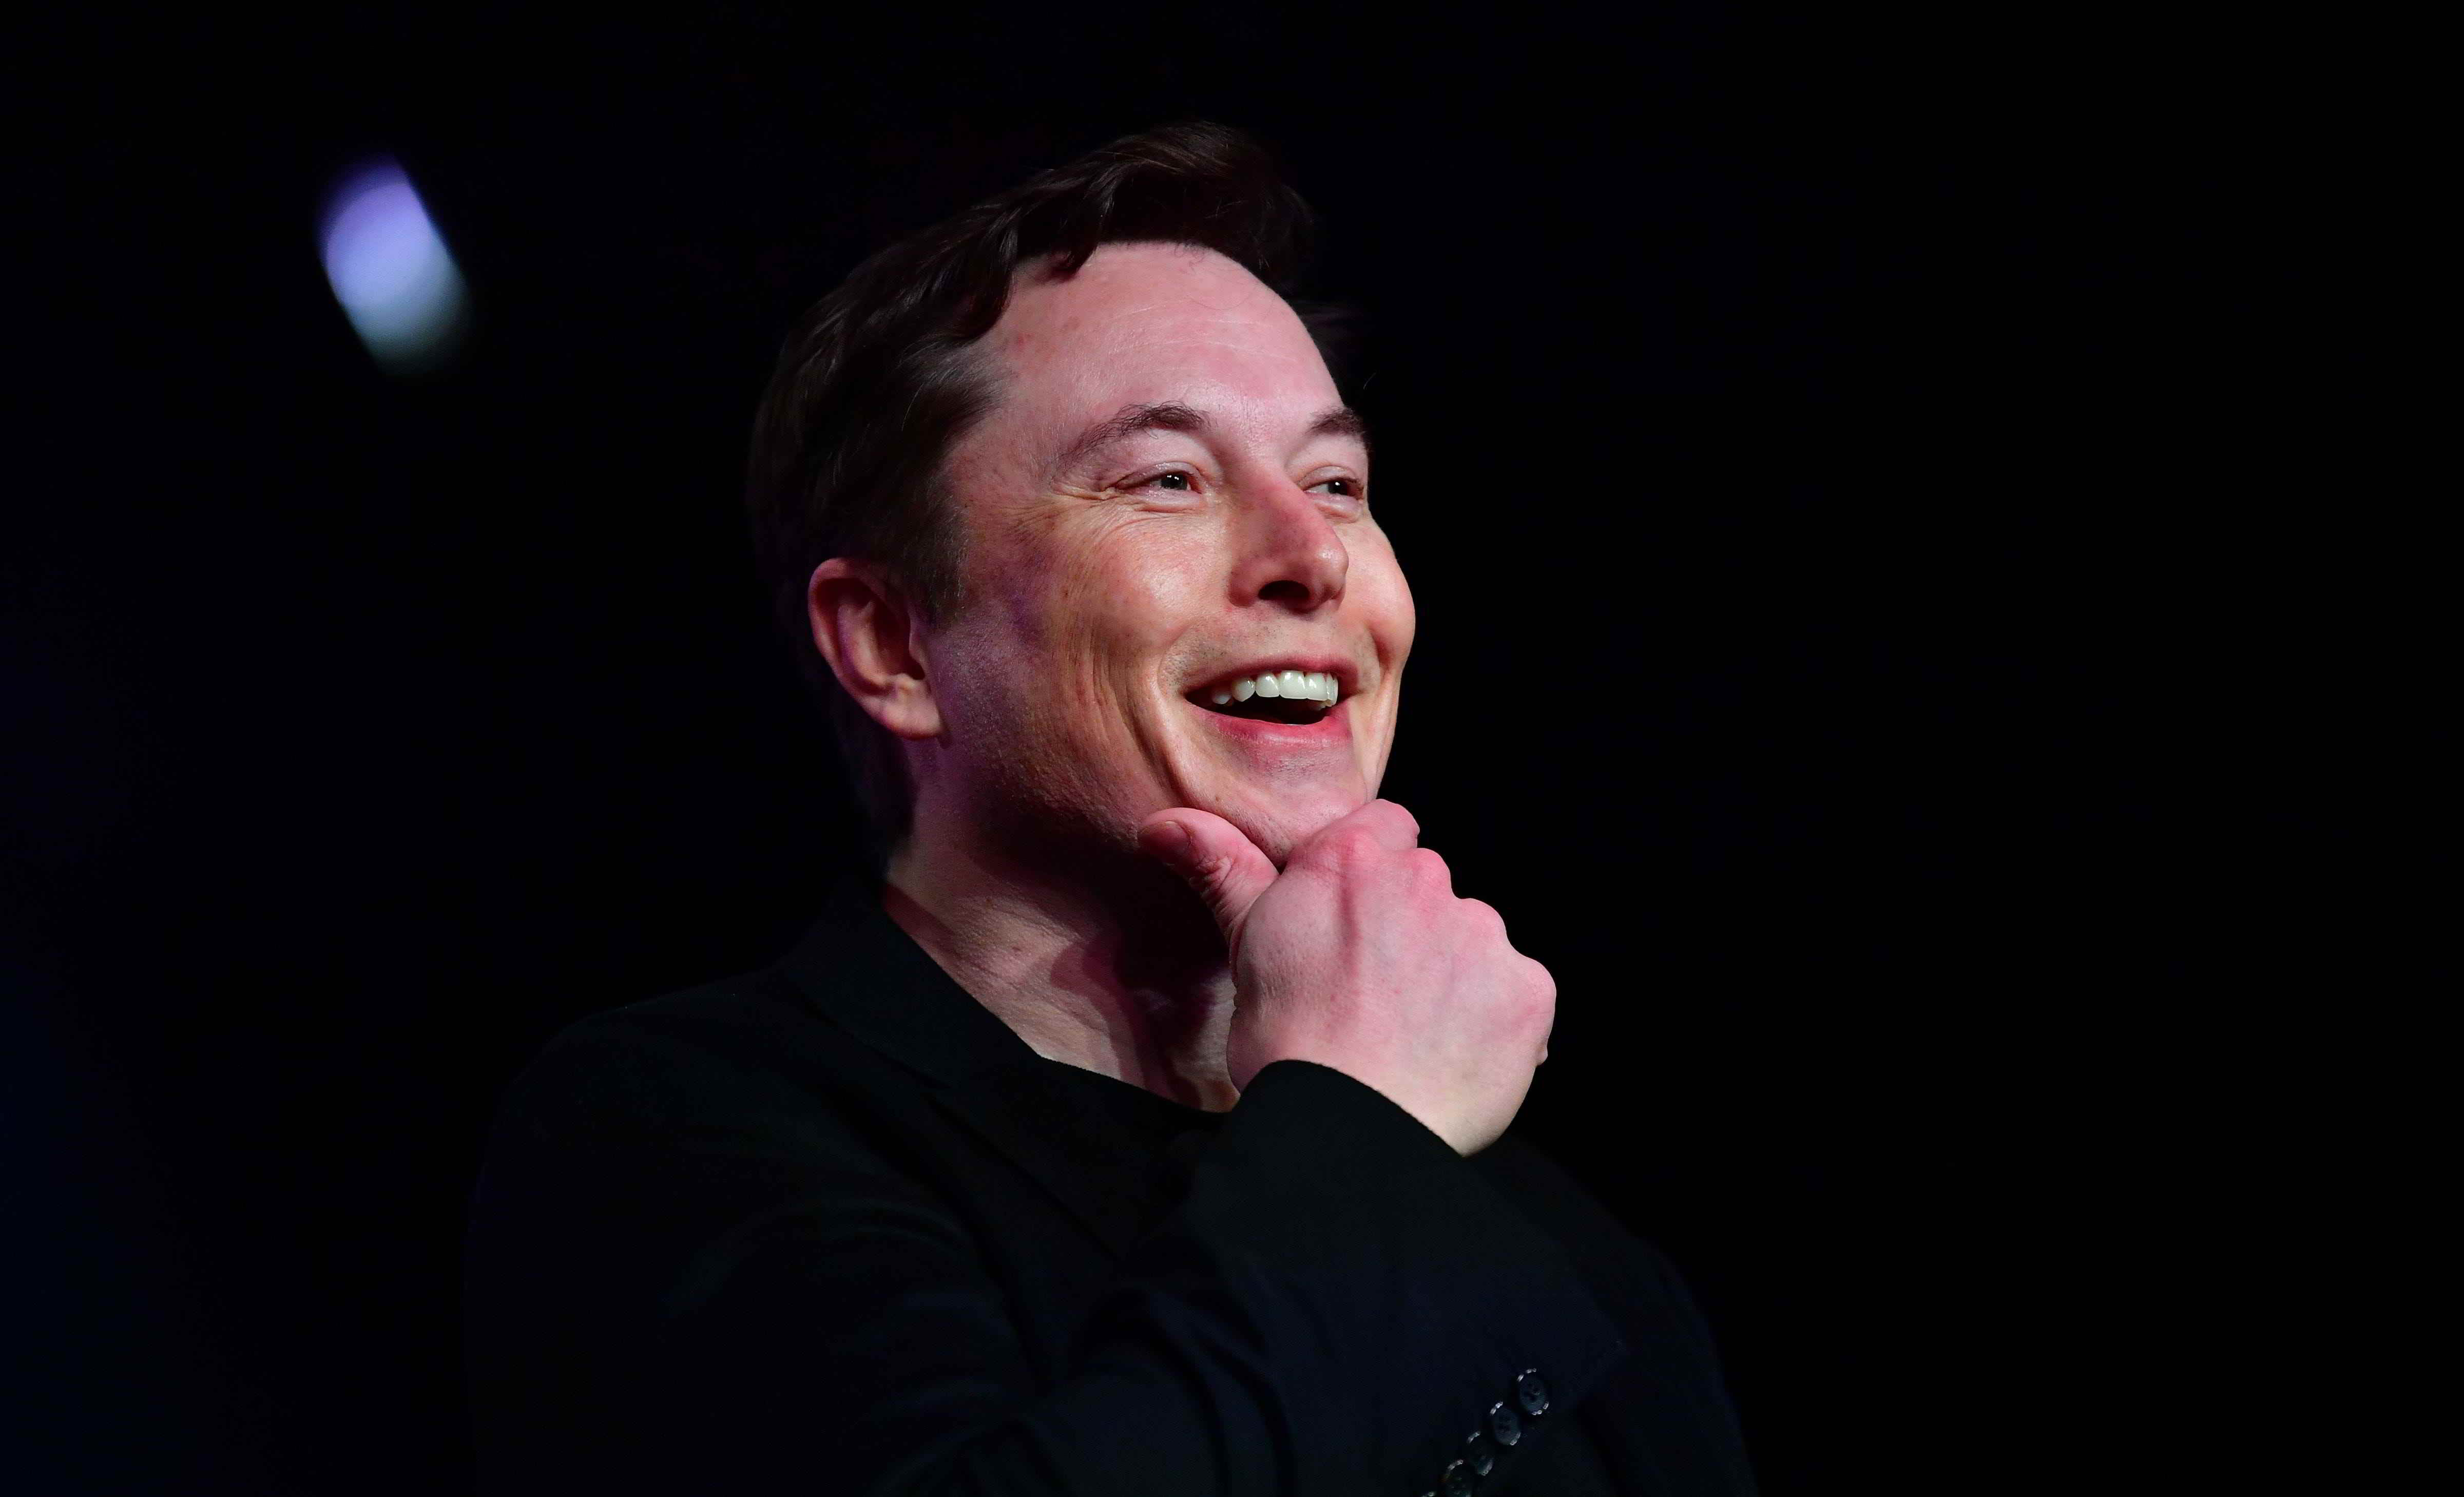 El fundador de Tesla anunció la compra del 9,2 % de la empresa tecnológica Twitter, según informó un comunicado remitido a la SEC